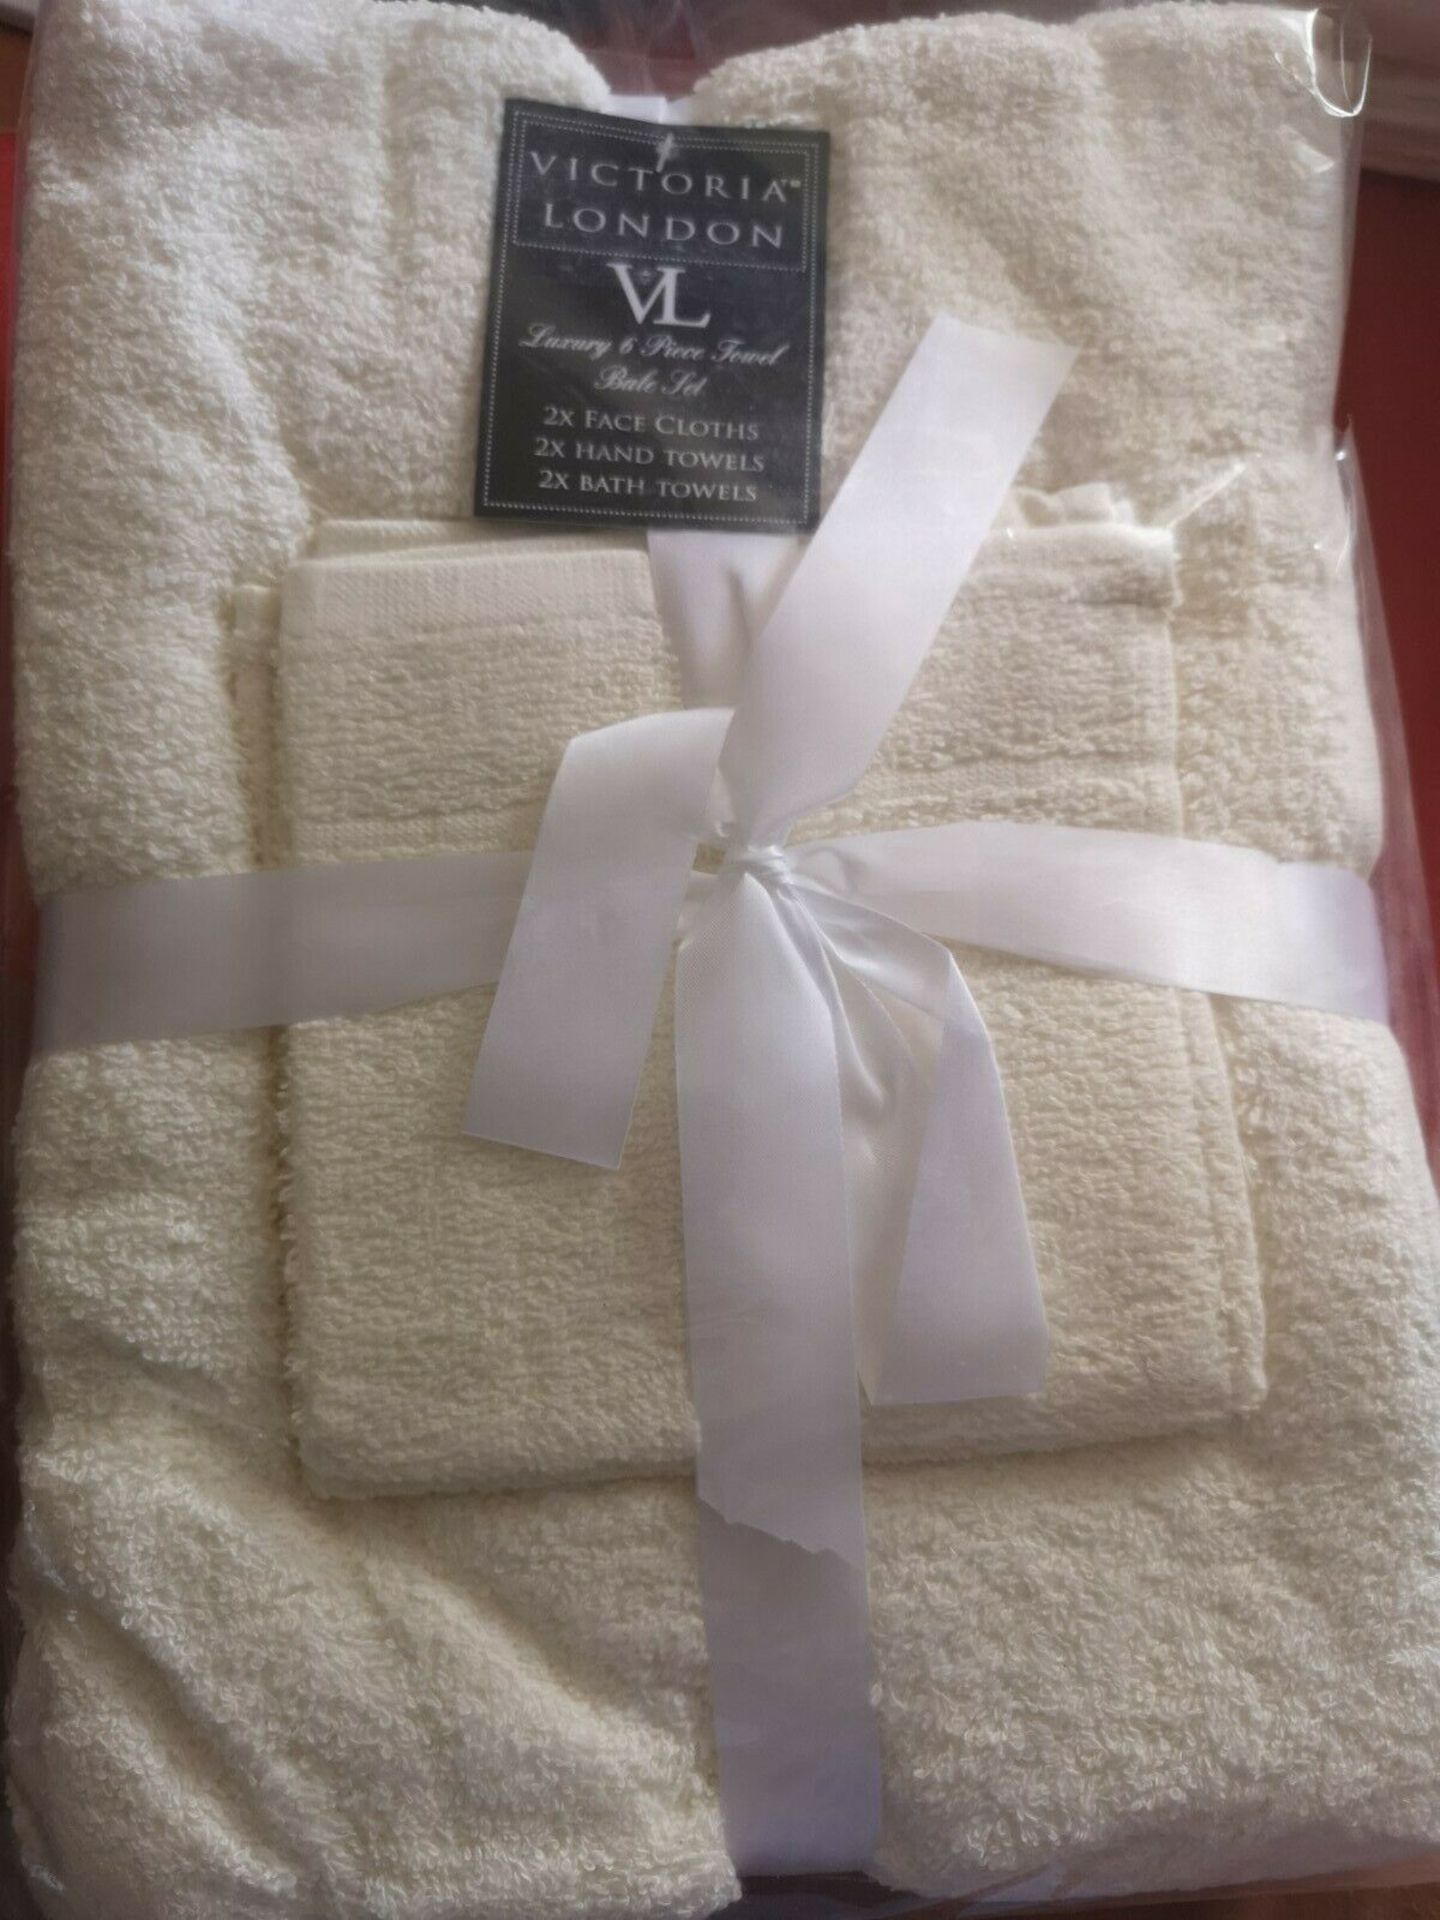 3 x Brand New Victoria London Bathroom towel Bale Set - Image 4 of 4